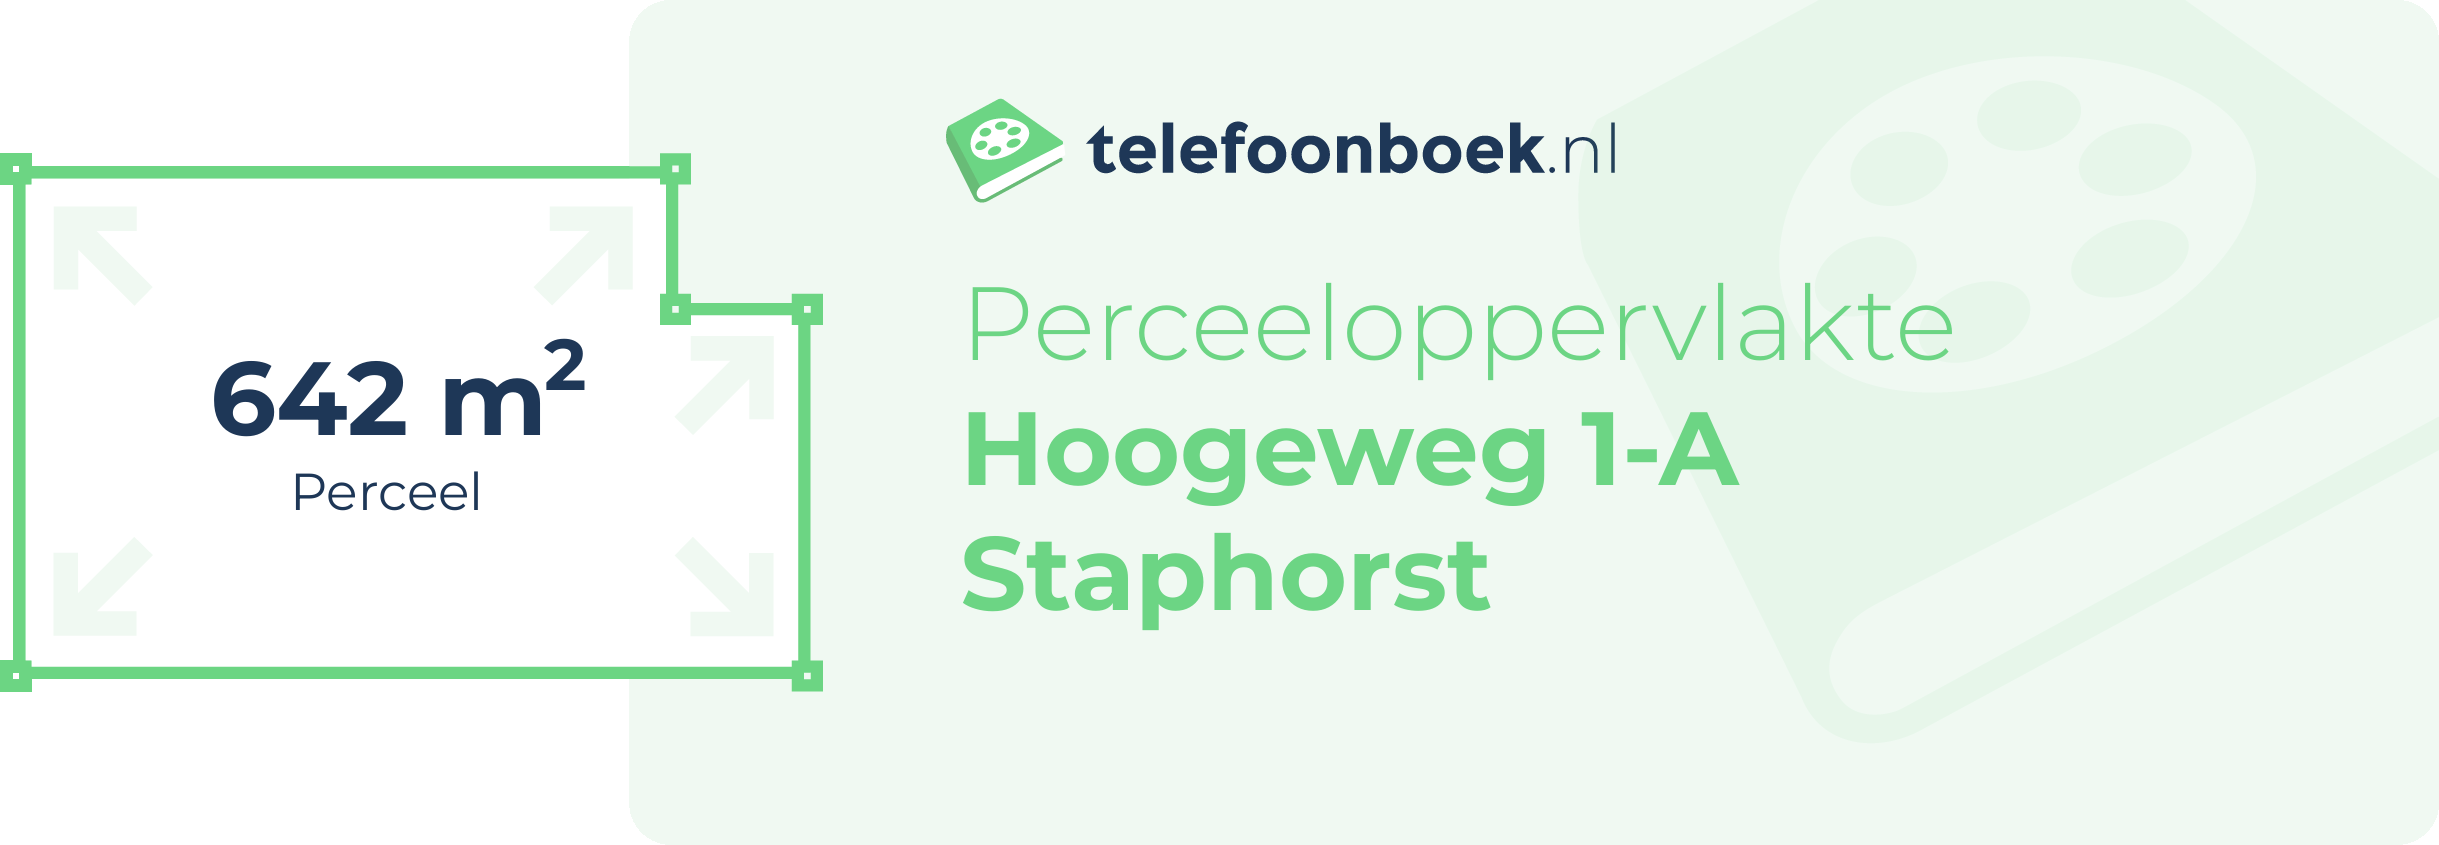 Perceeloppervlakte Hoogeweg 1-A Staphorst